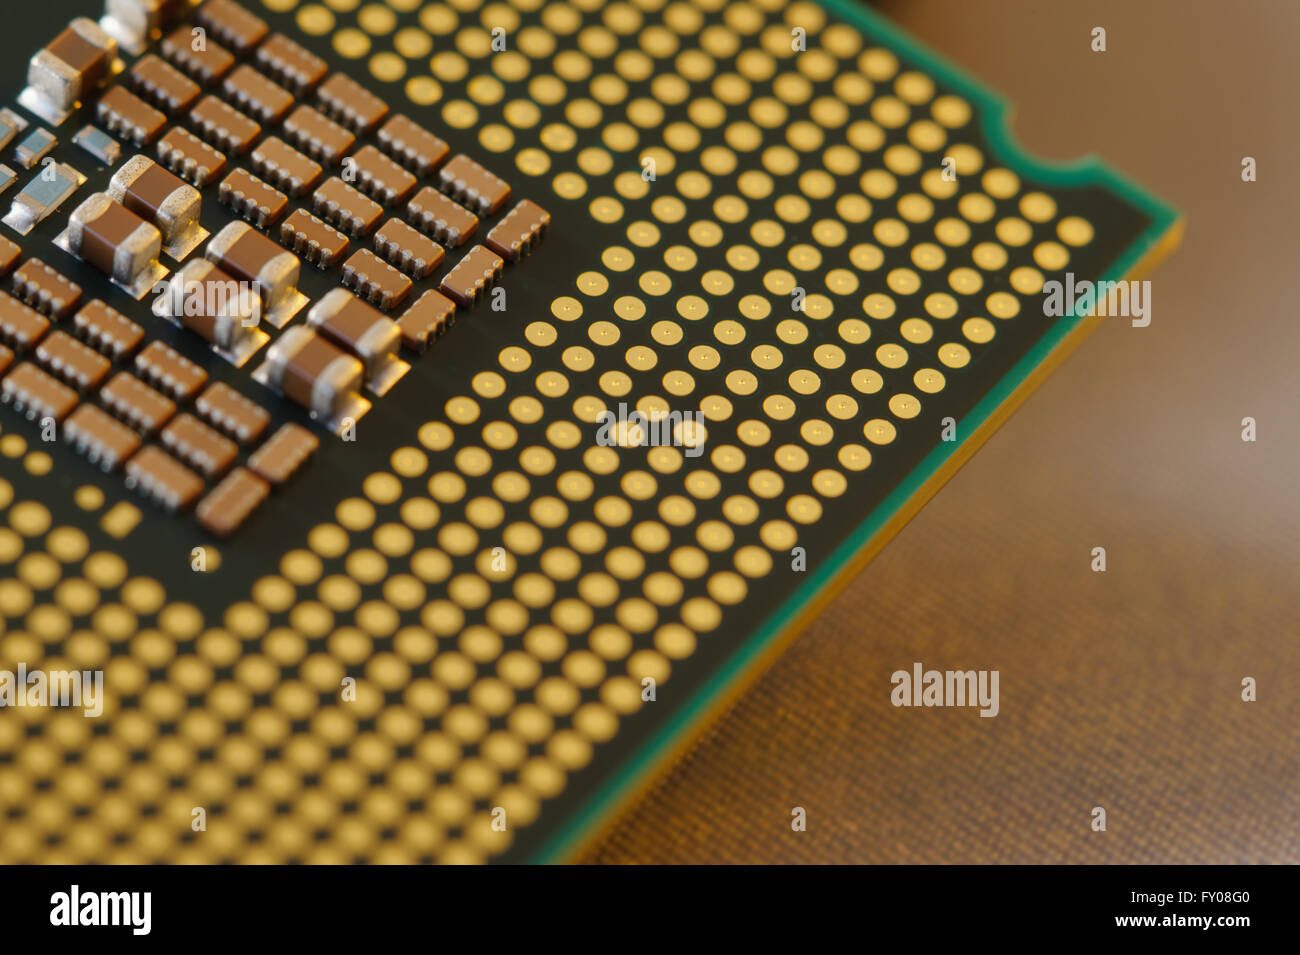 Close-up of Intel Harpertown CPU Stock Photo - Alamy